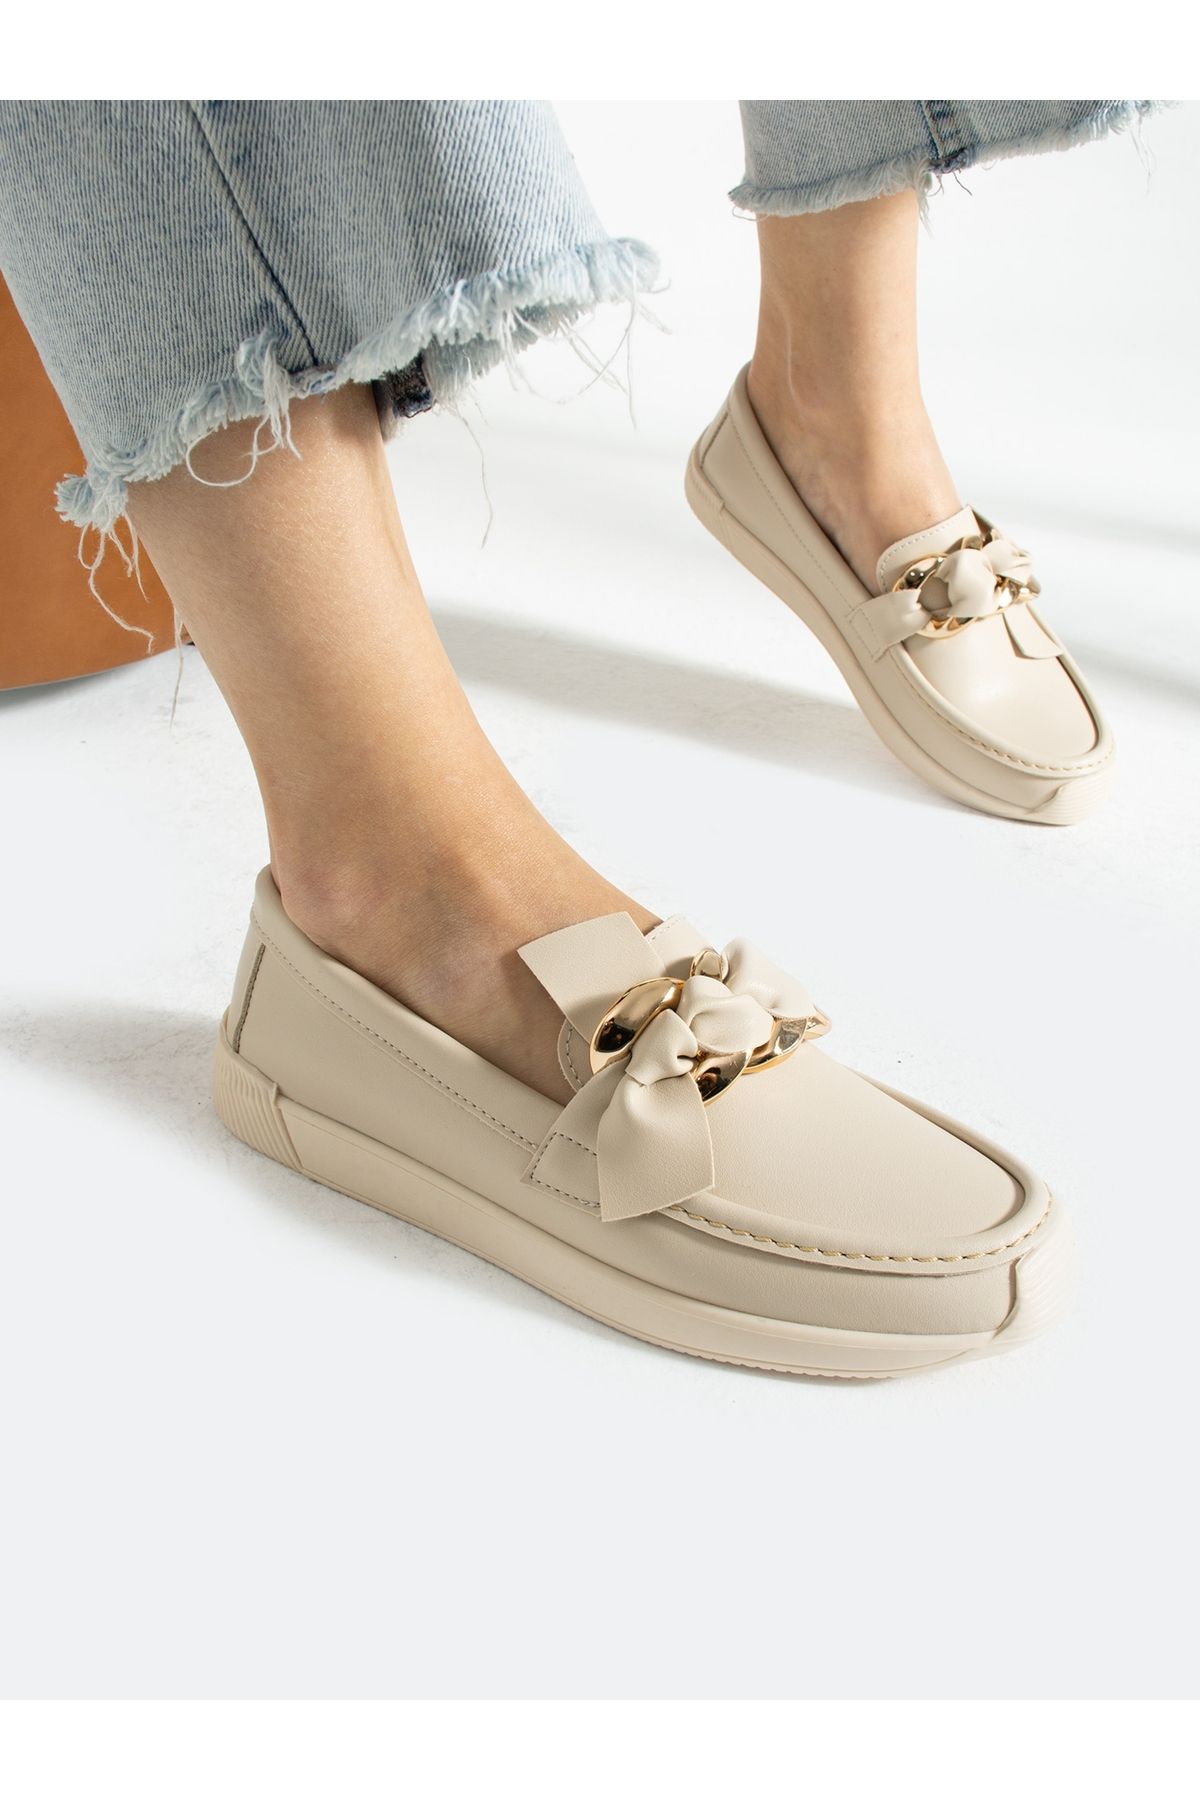 Alemdar Shoes GRANT Vizon Toka Detay Kadın Loafer